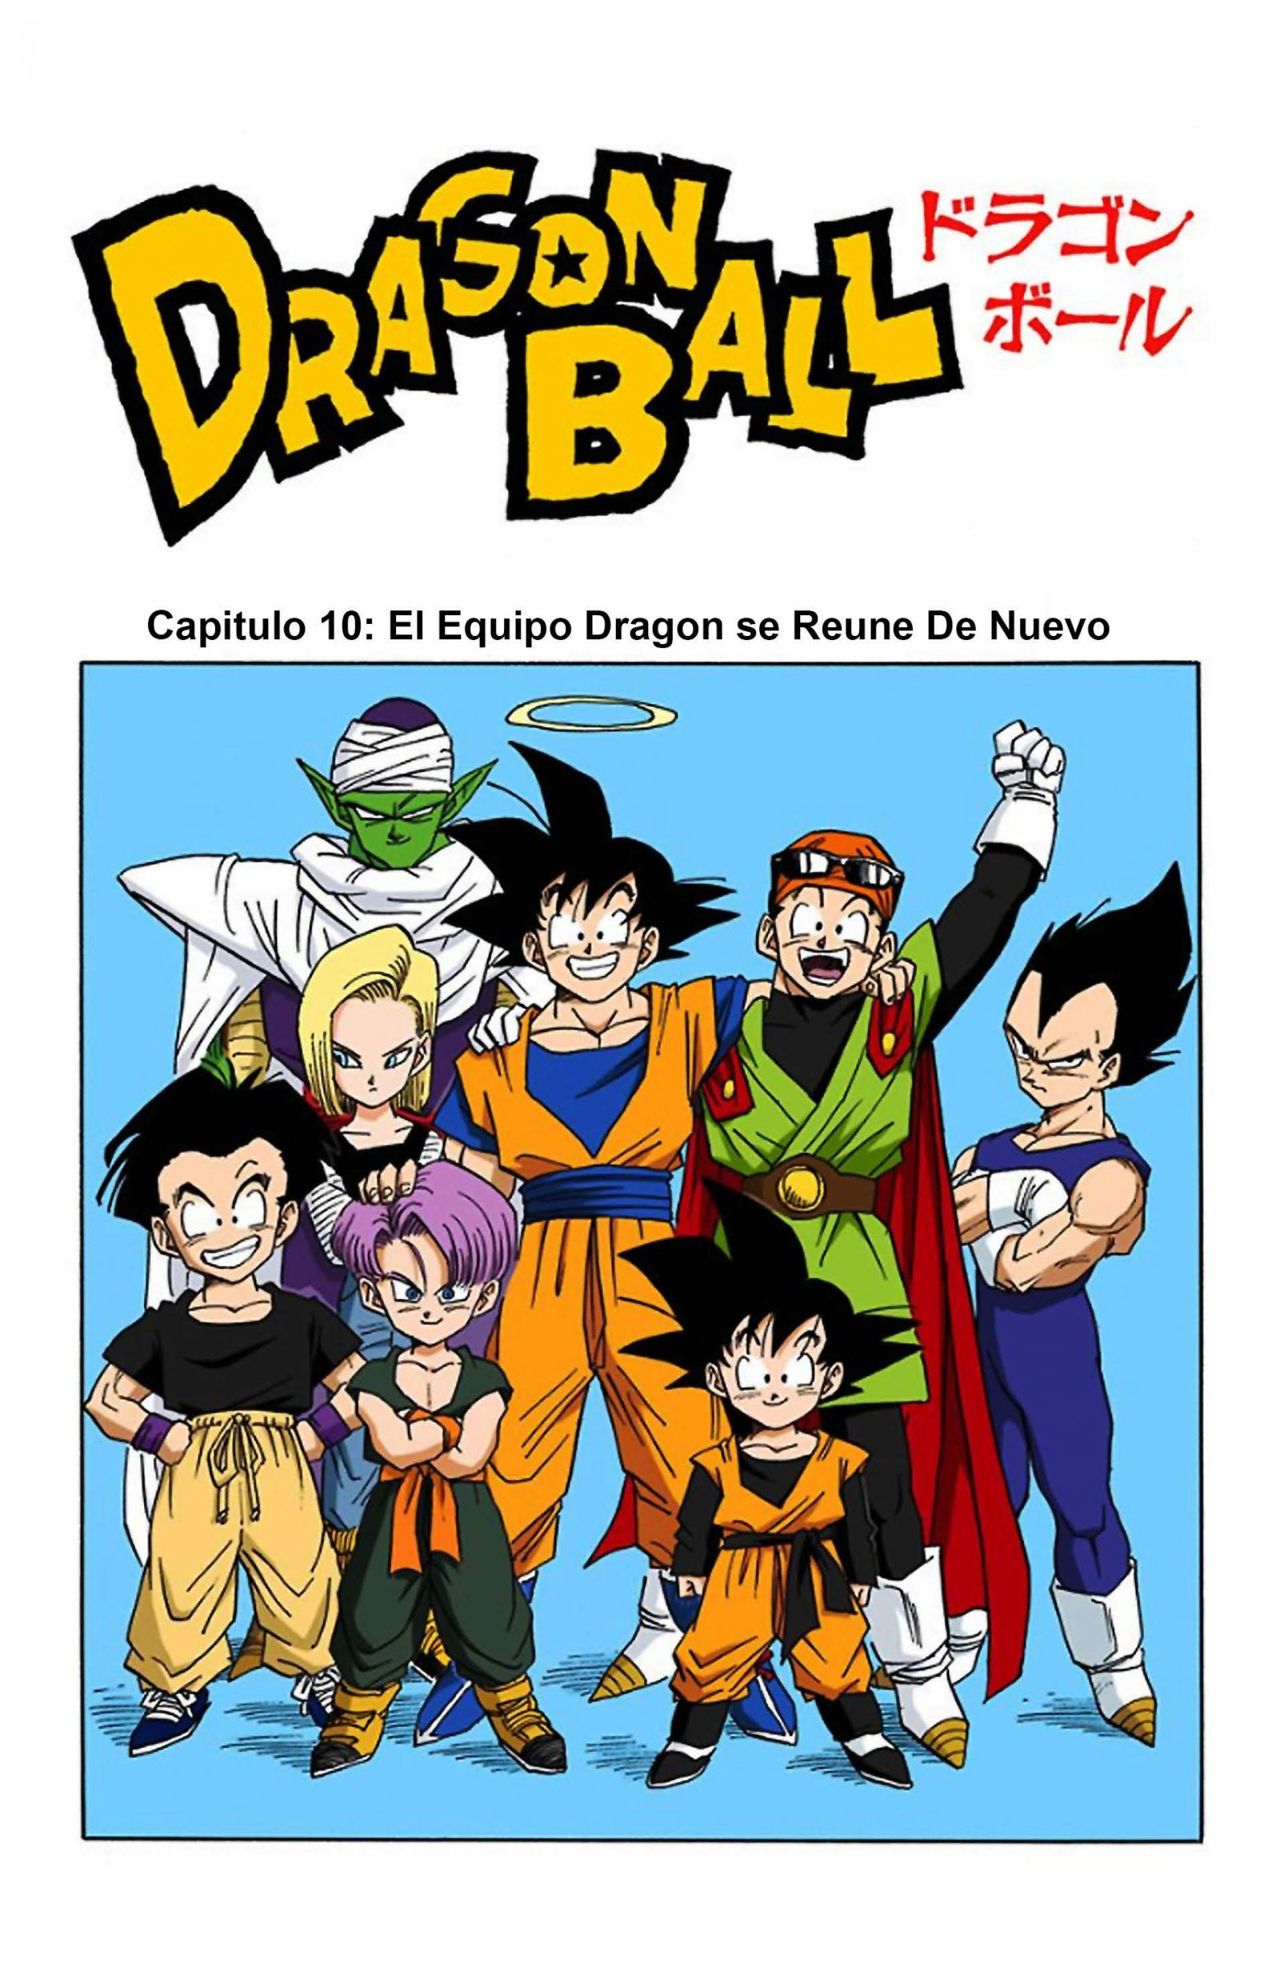 Dragon Ball Z Full Color: The Buu Saga Vol. 1 Ch. 1 Chapter 1, Dragon Ball Z  Full Color: The Buu Saga Vol. 1 Ch. 1 Chapter 1 Page 1 - Niadd